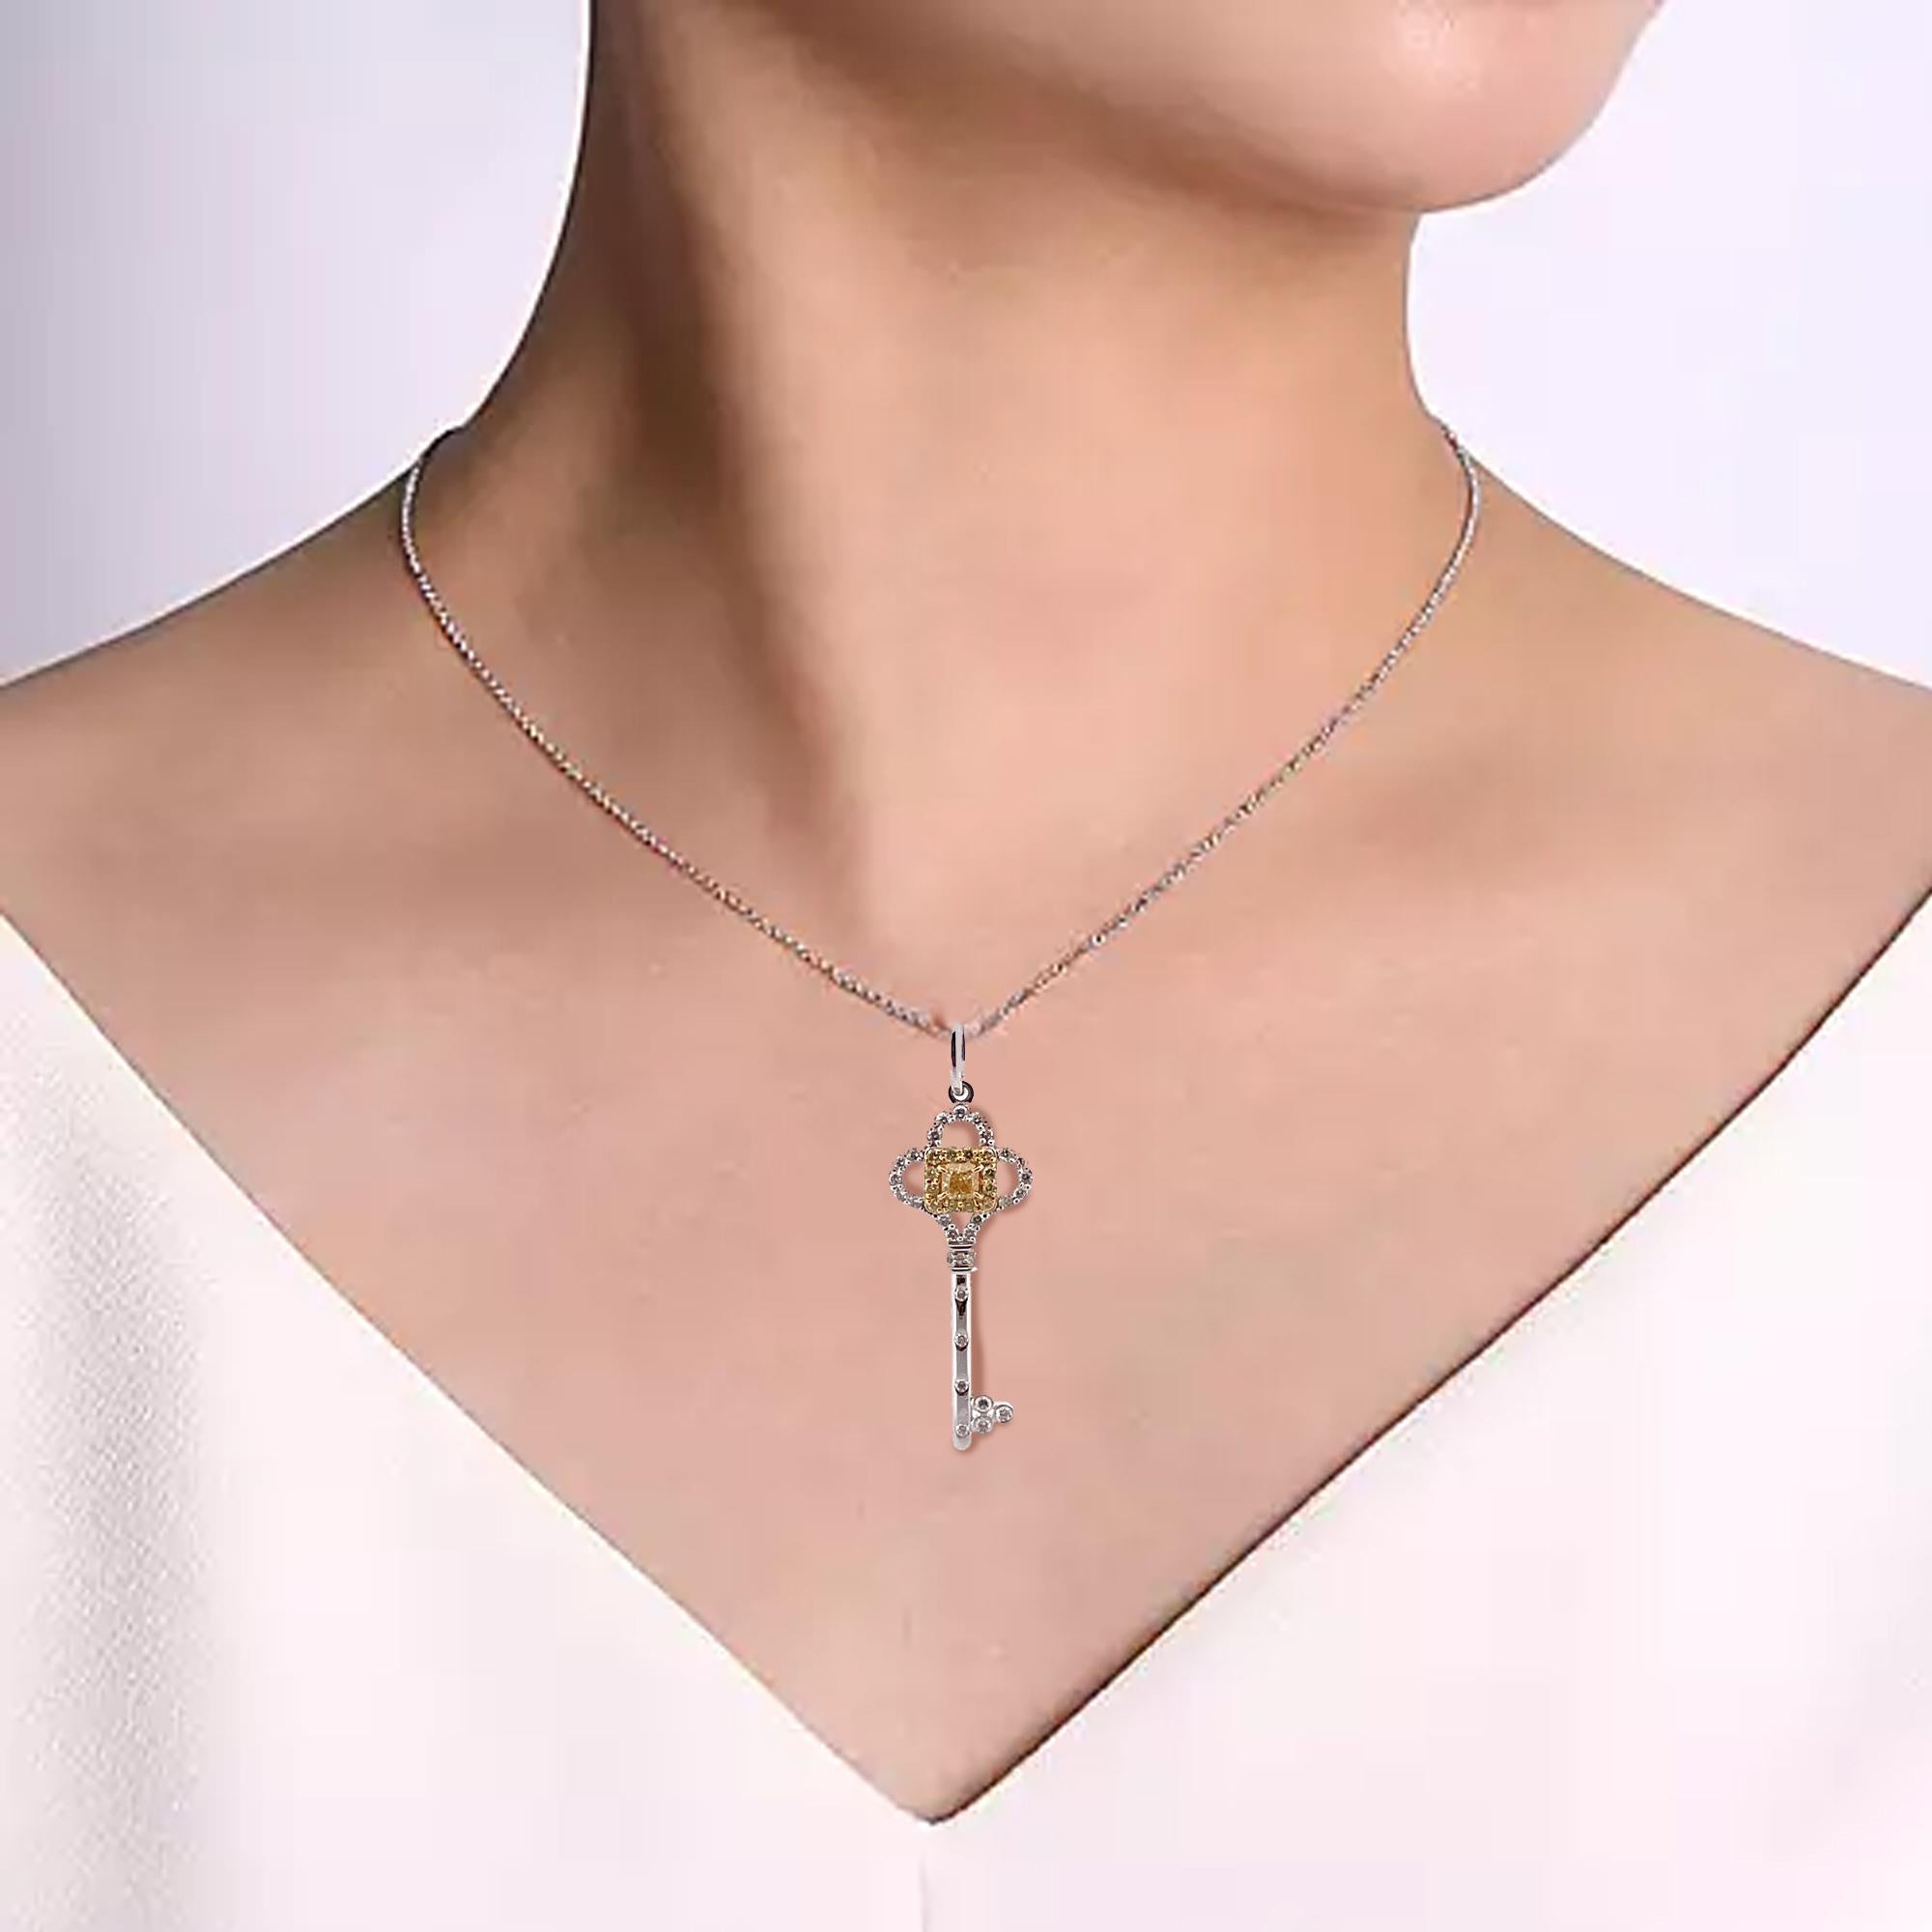 Women's or Men's Exquisite 18k White Gold Diamond Key Necklace For Sale